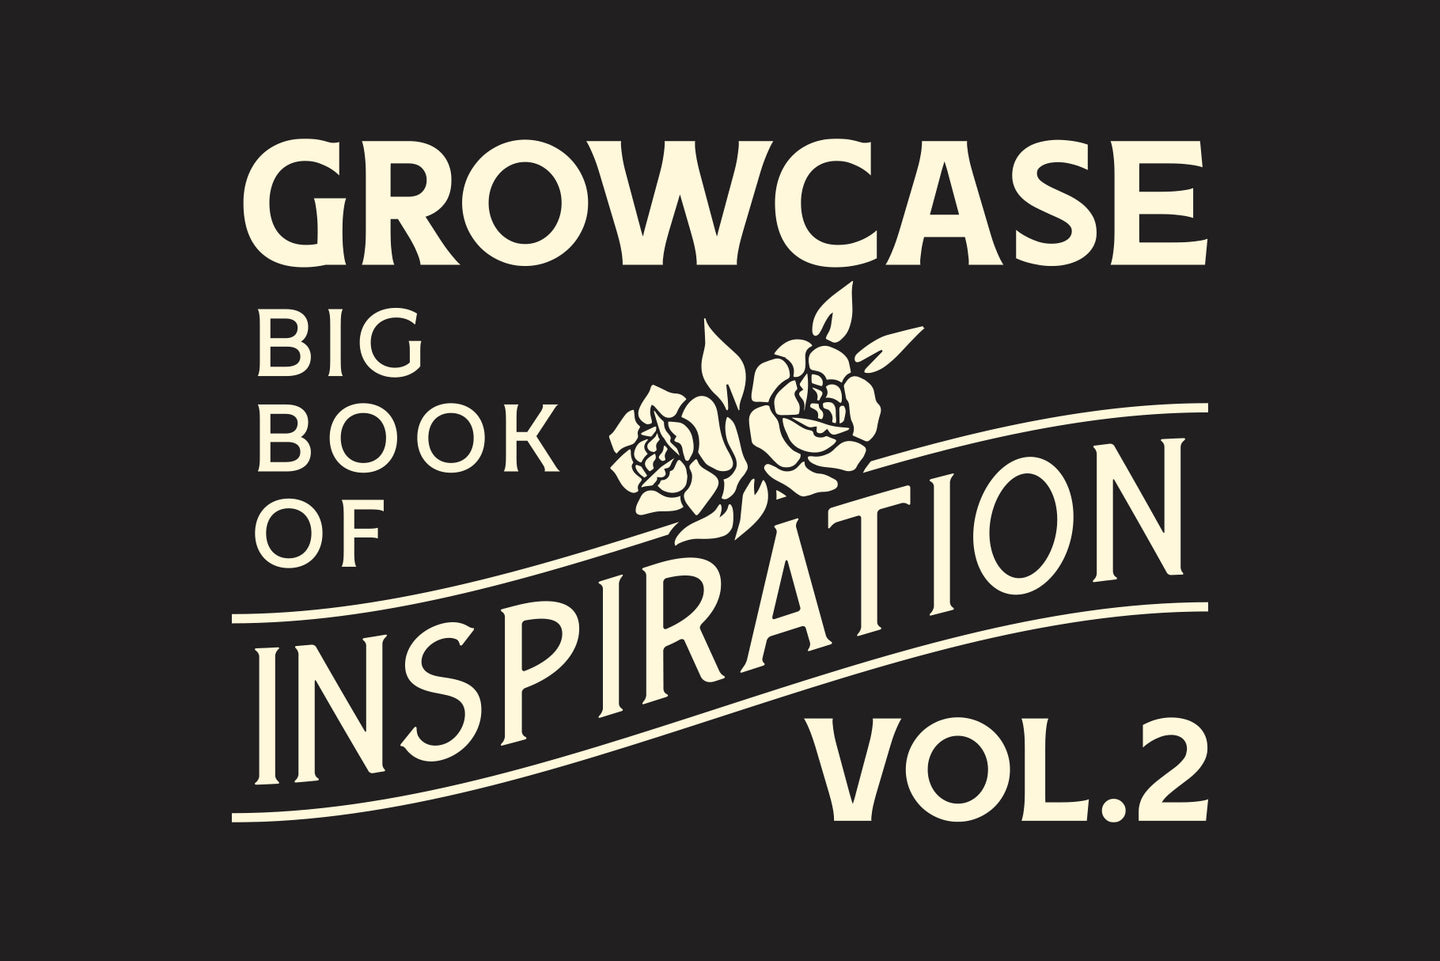 Growcase Big Book of Inspiration - Vol.2